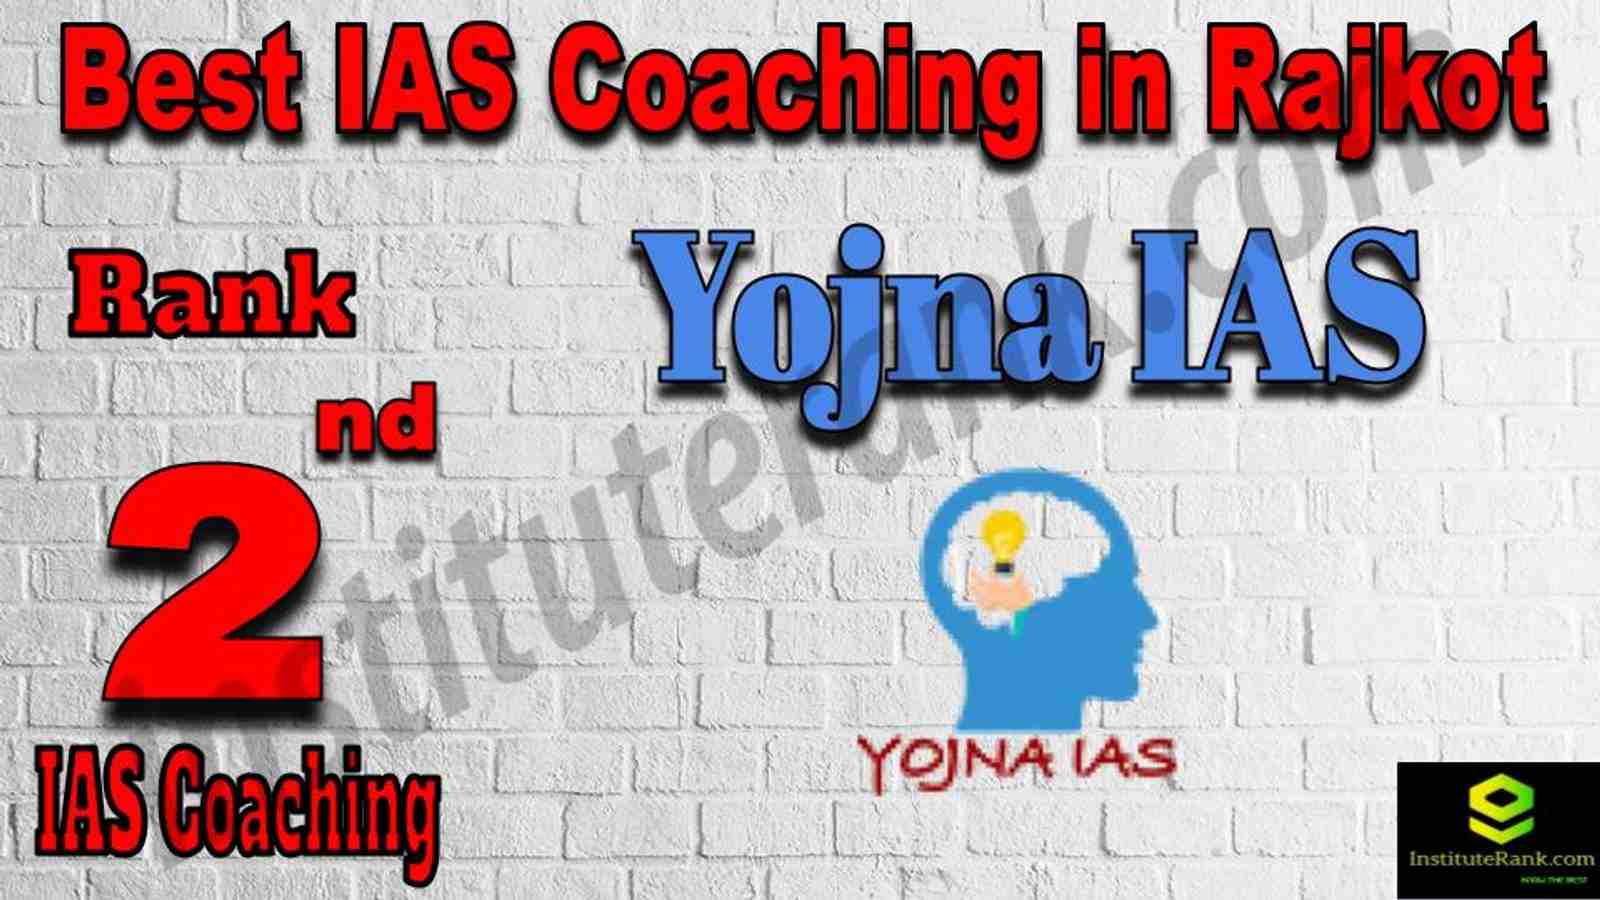 2nd Best IAS Coaching in Rajkot